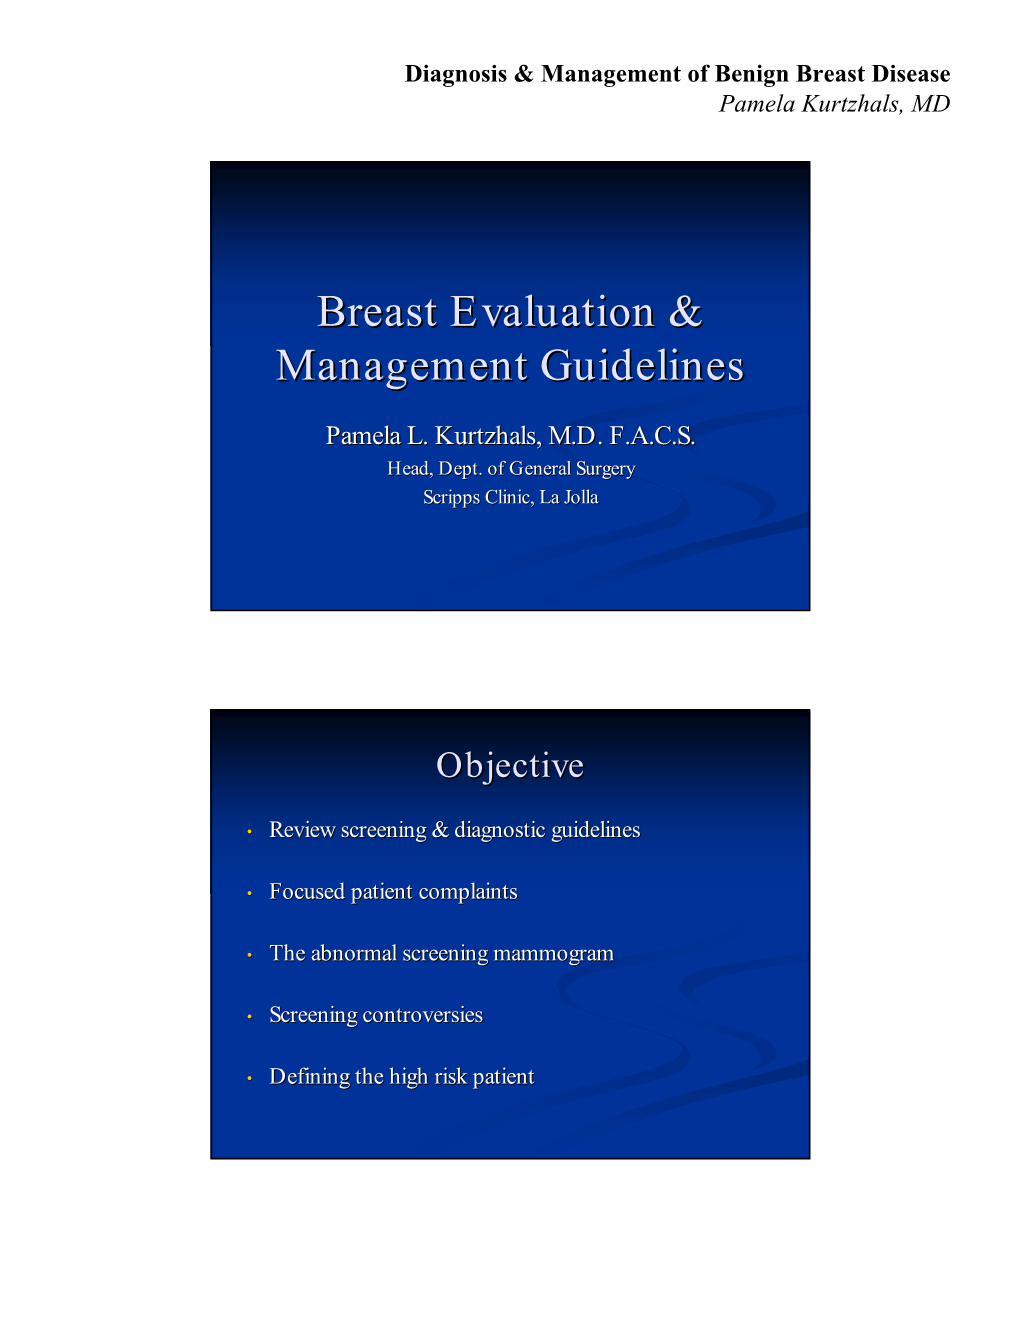 Breast Evaluation & Management Guidelines